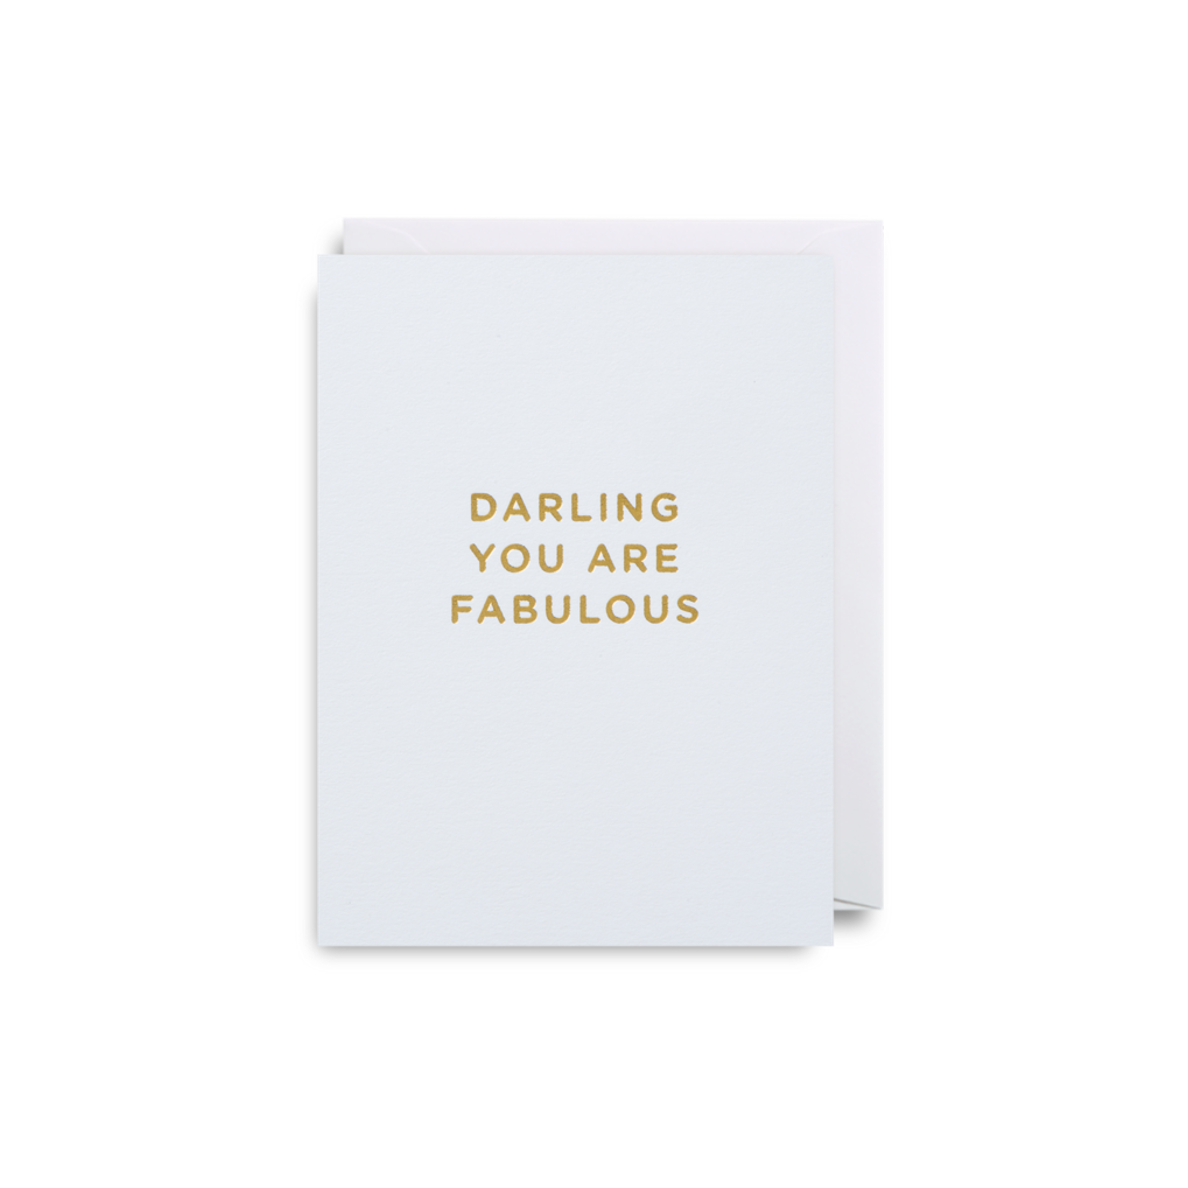 Mini Darling You Are Fabulous Card